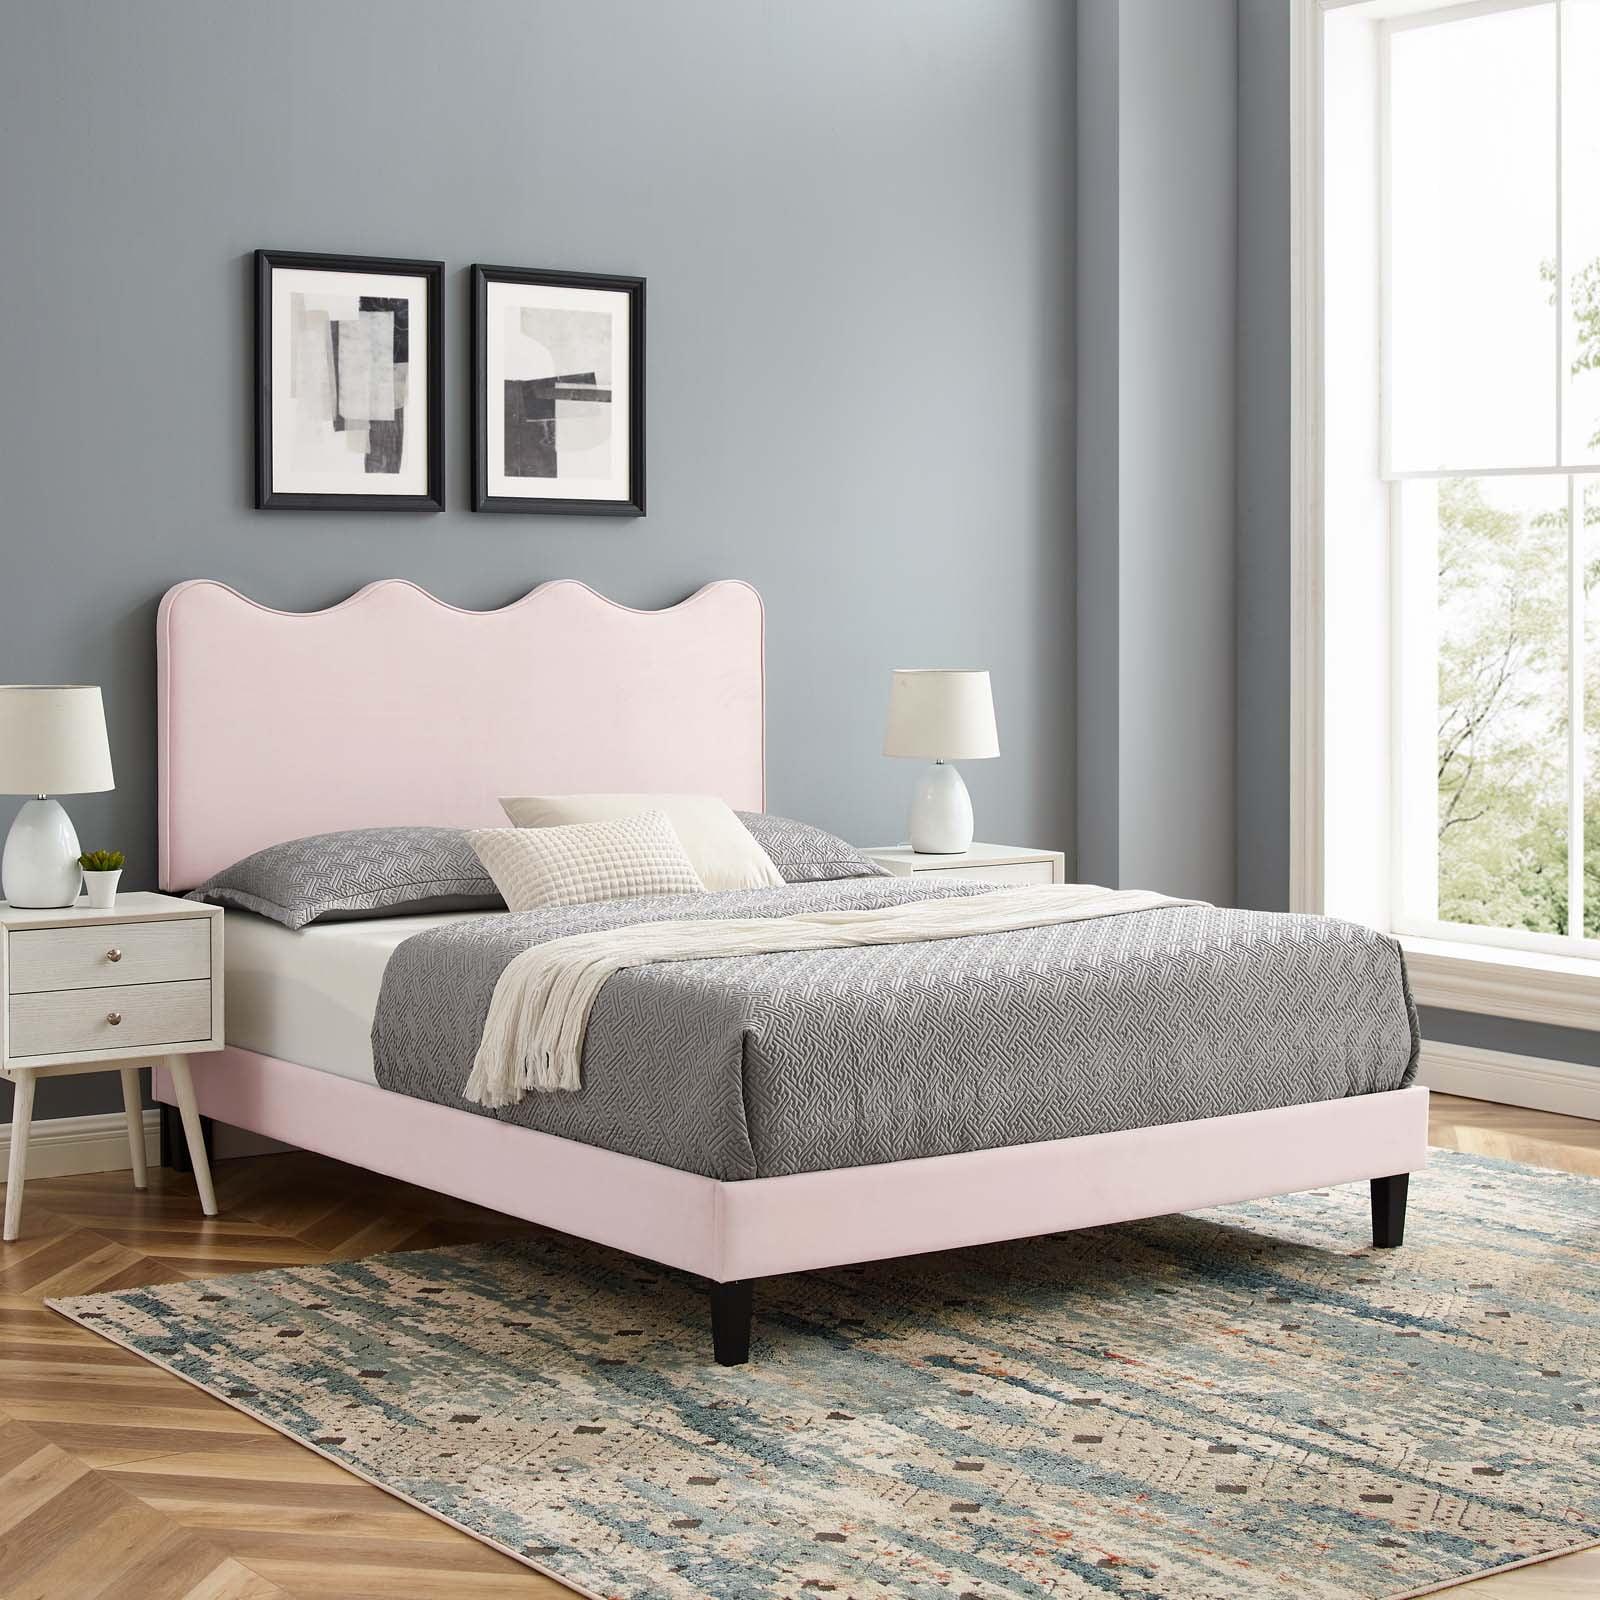 Ocean Wave Inspired Pink Velvet Full Platform Bed with Headboard